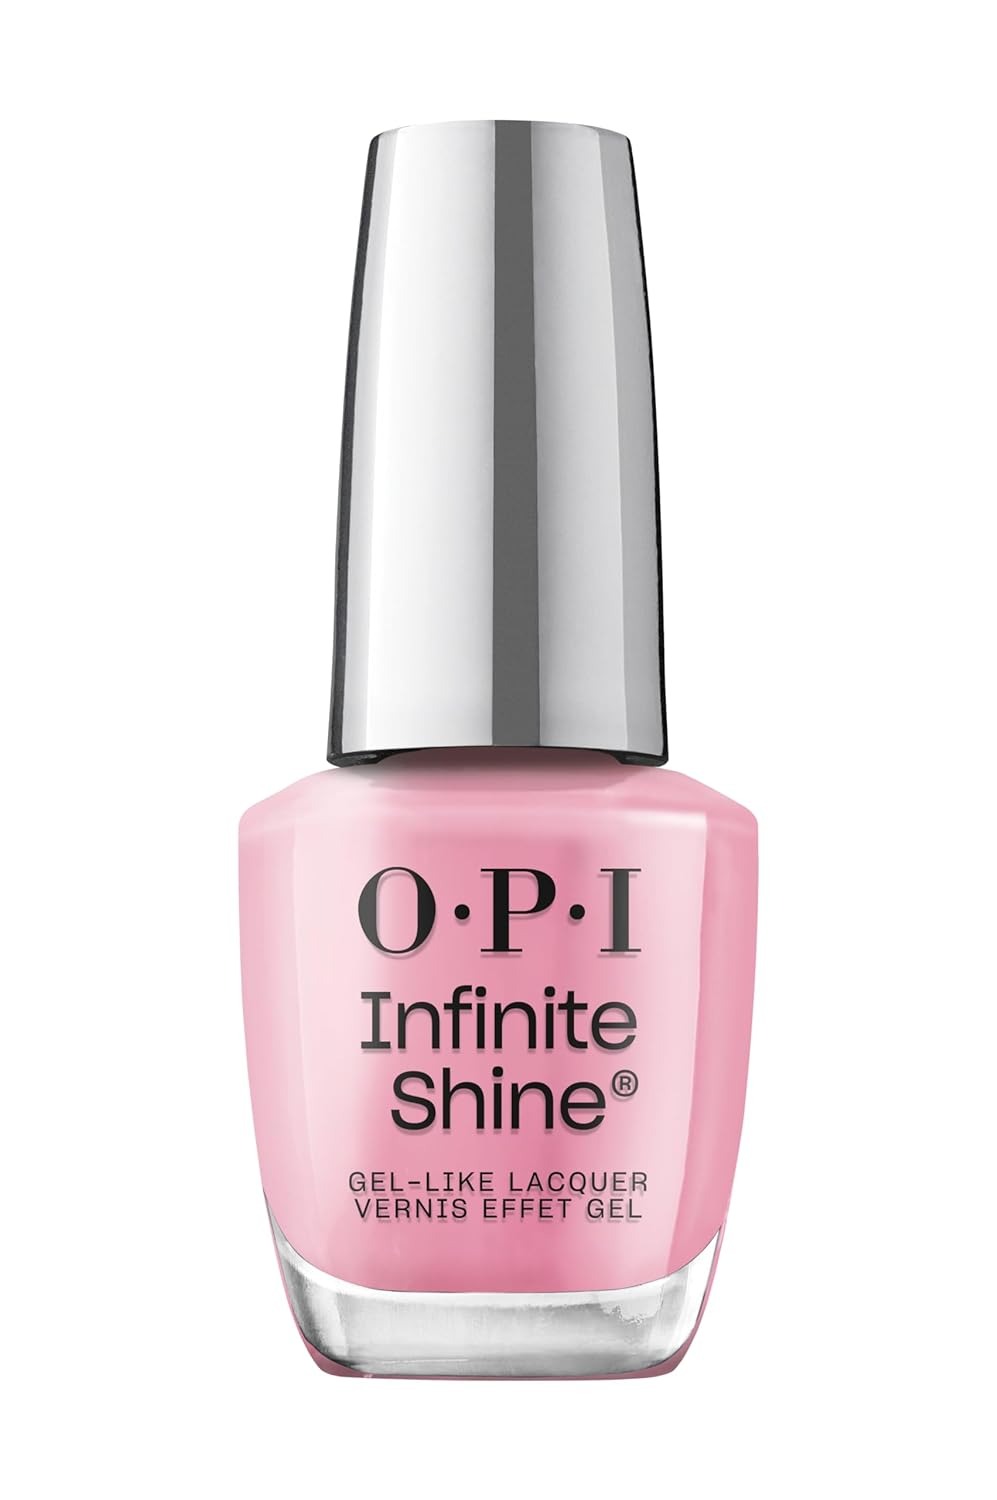 OPI Infinite Shine Nail Polish in Flamingo Your Way